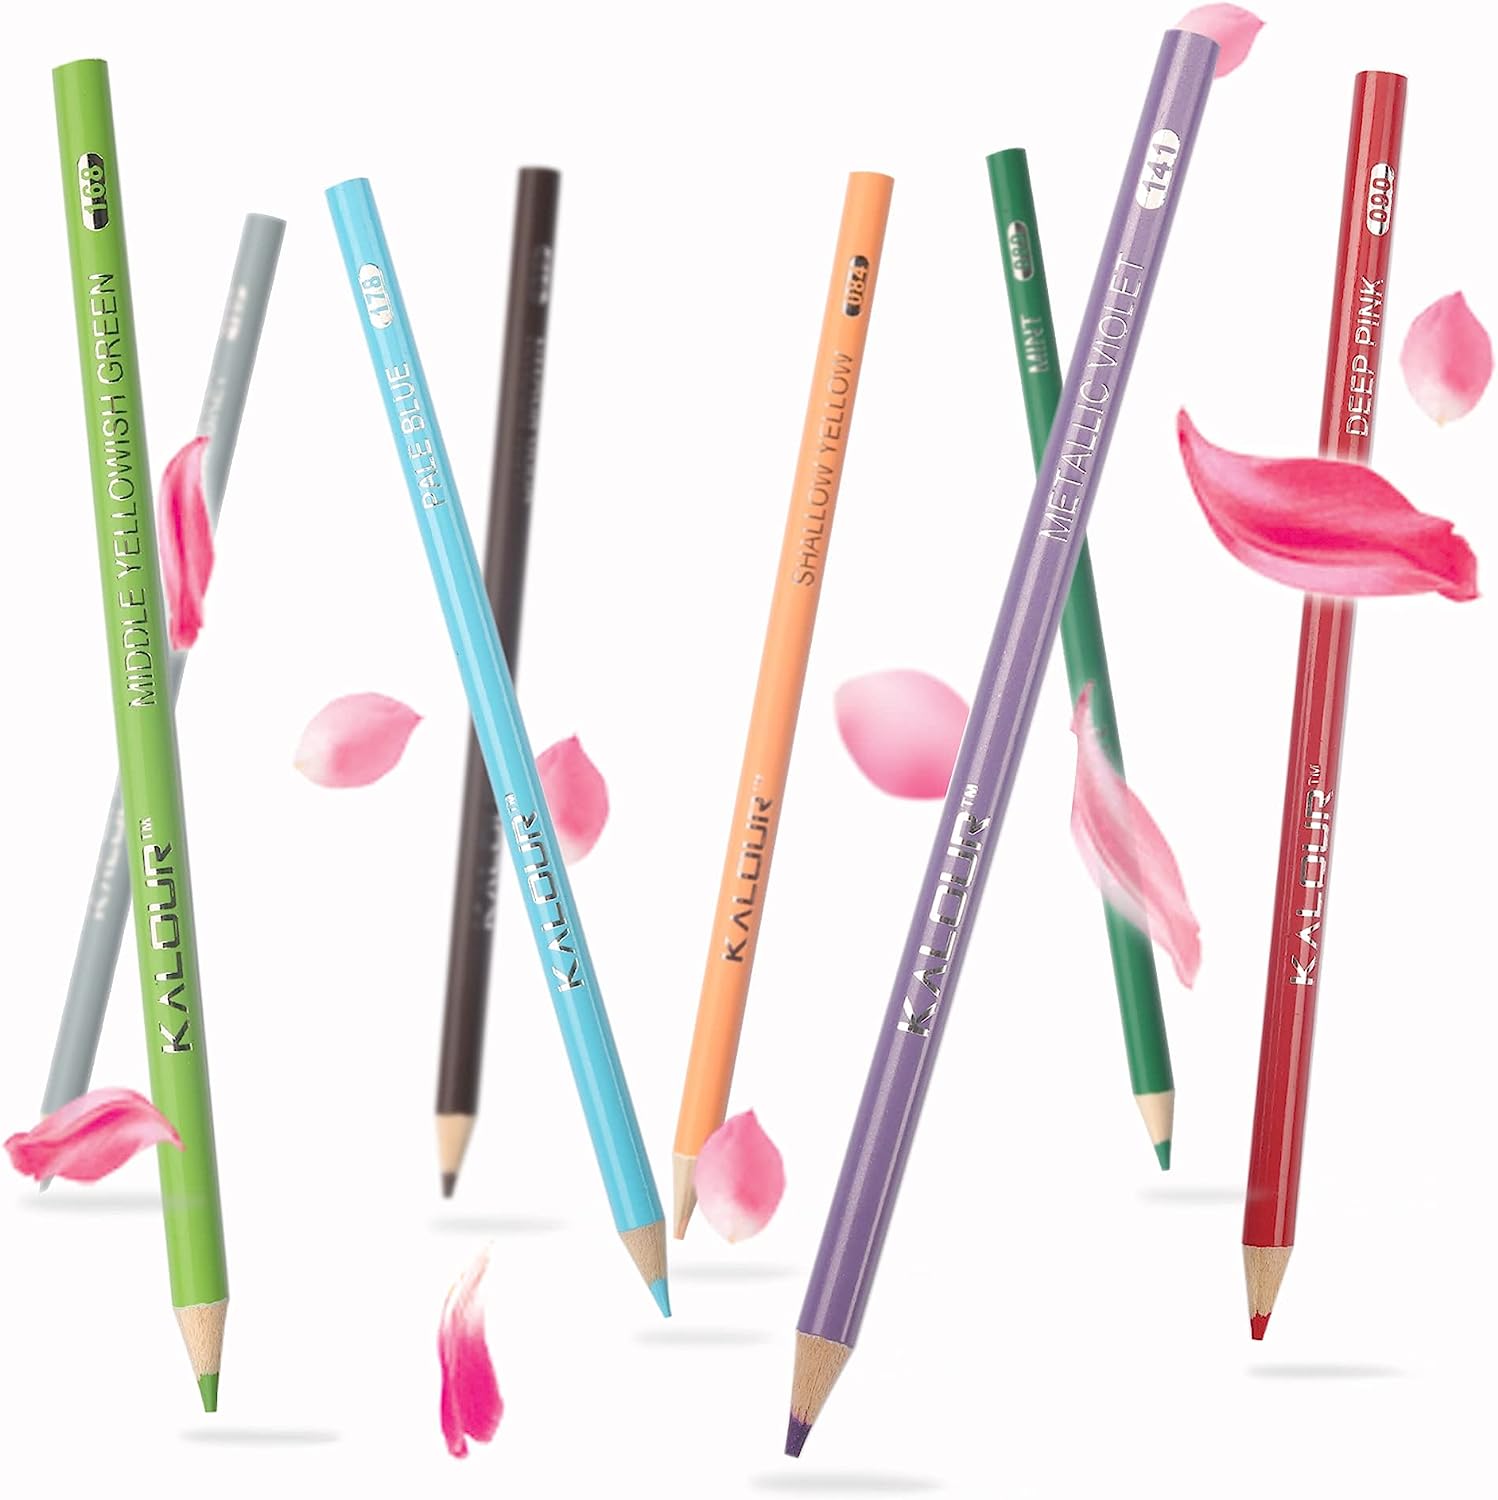 KALOUR 240 Premium Color Pencil Set Free Shipping Gift Box Soft